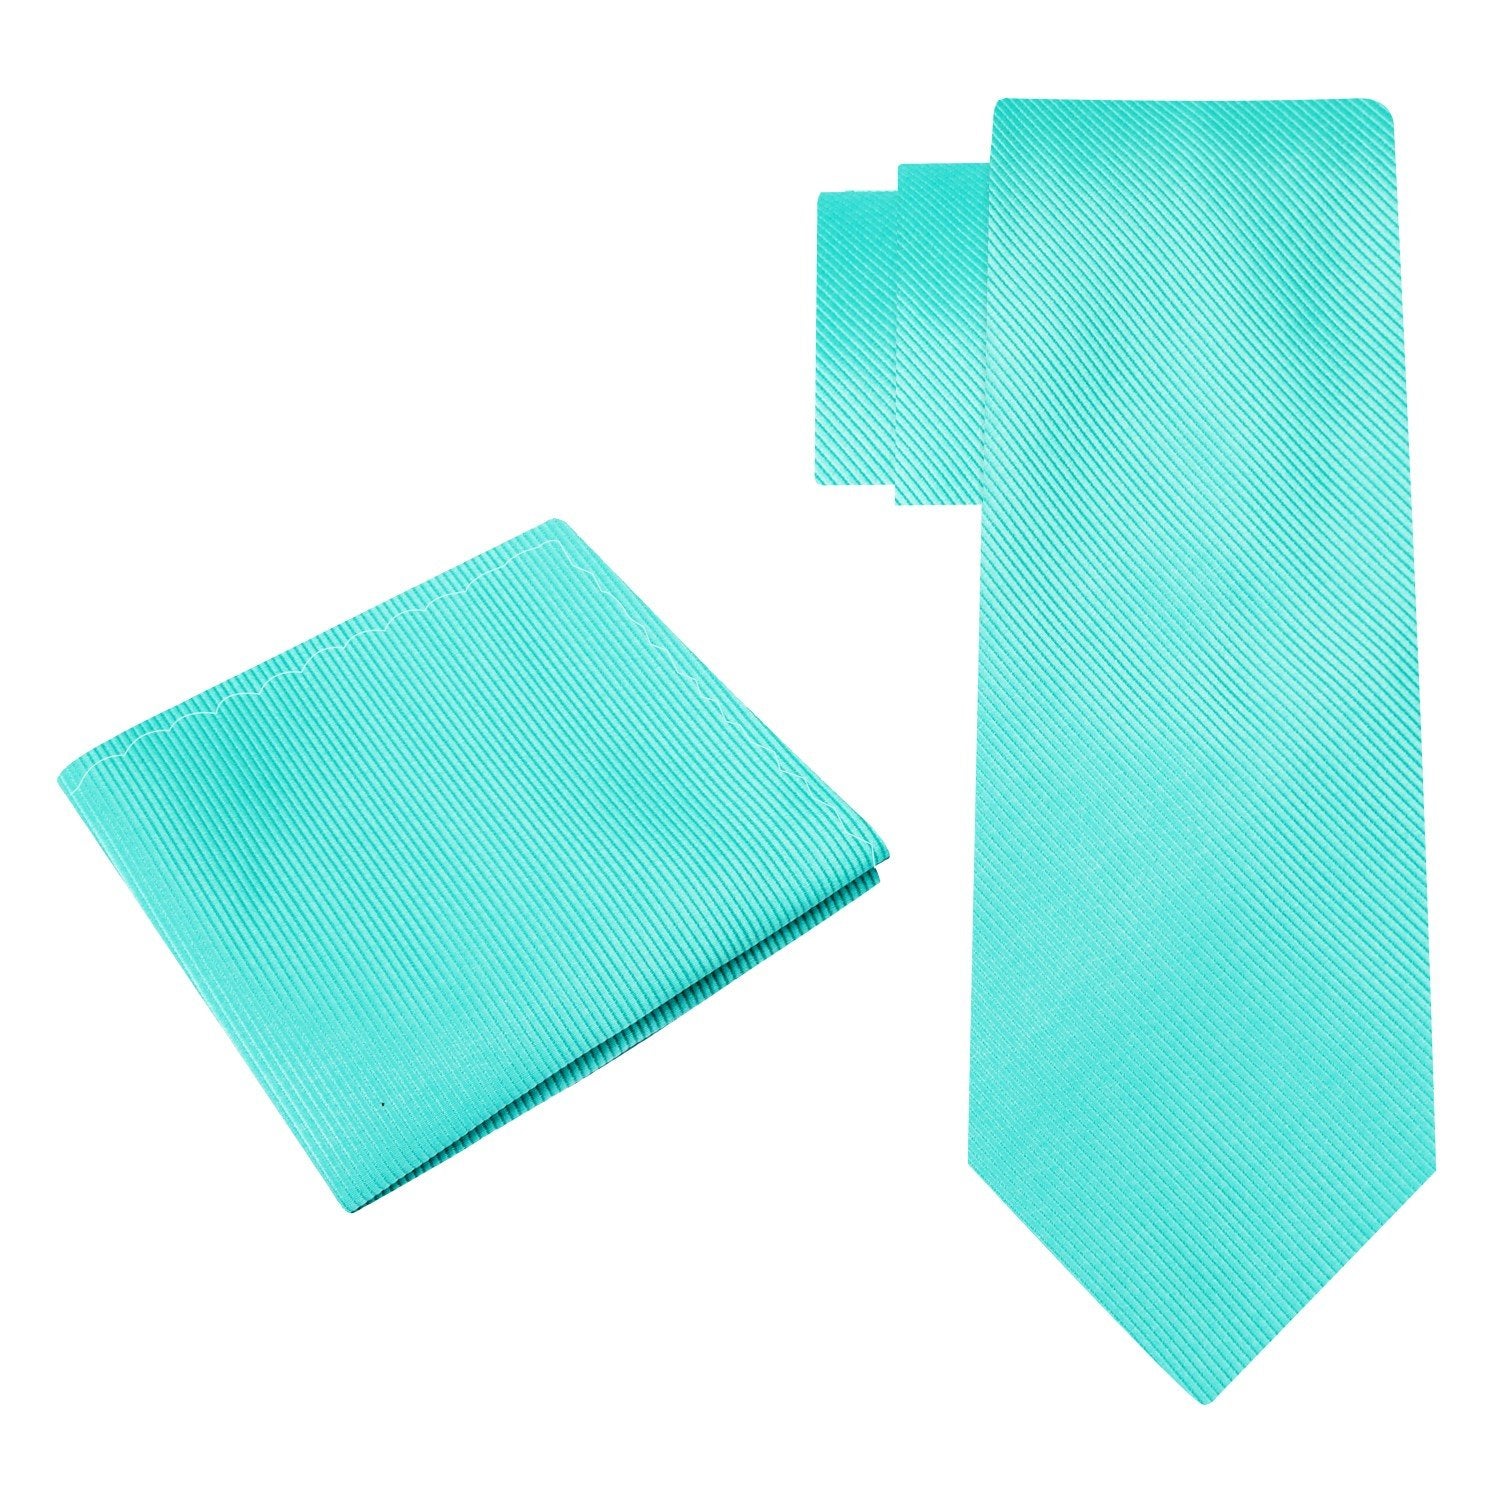 Alt view: Mint Tie and Pocket Square